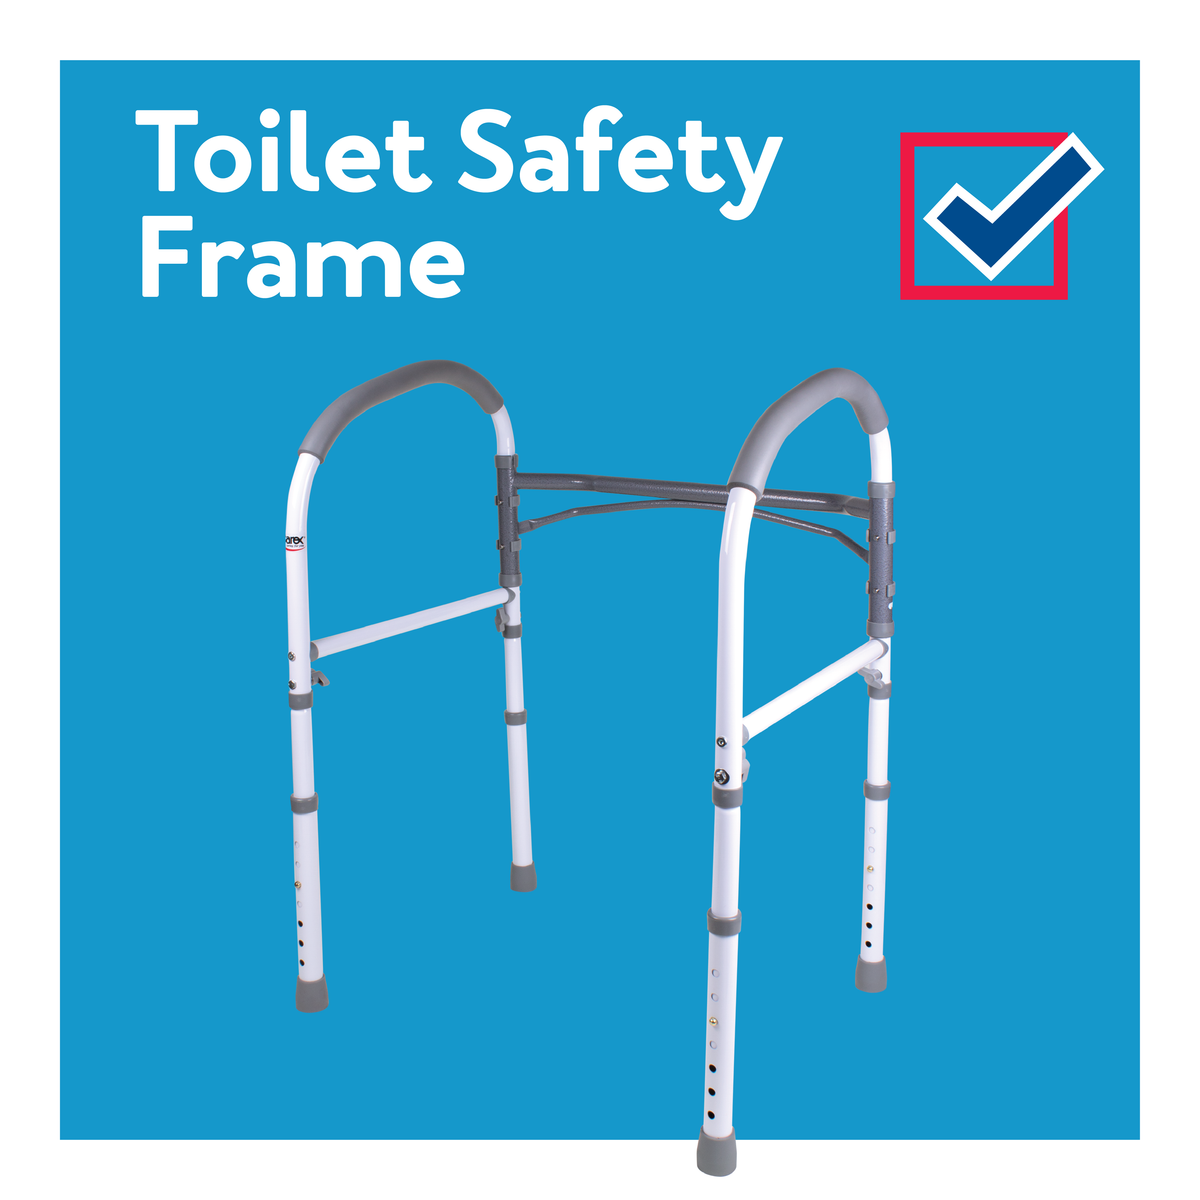 Toilet safety frame